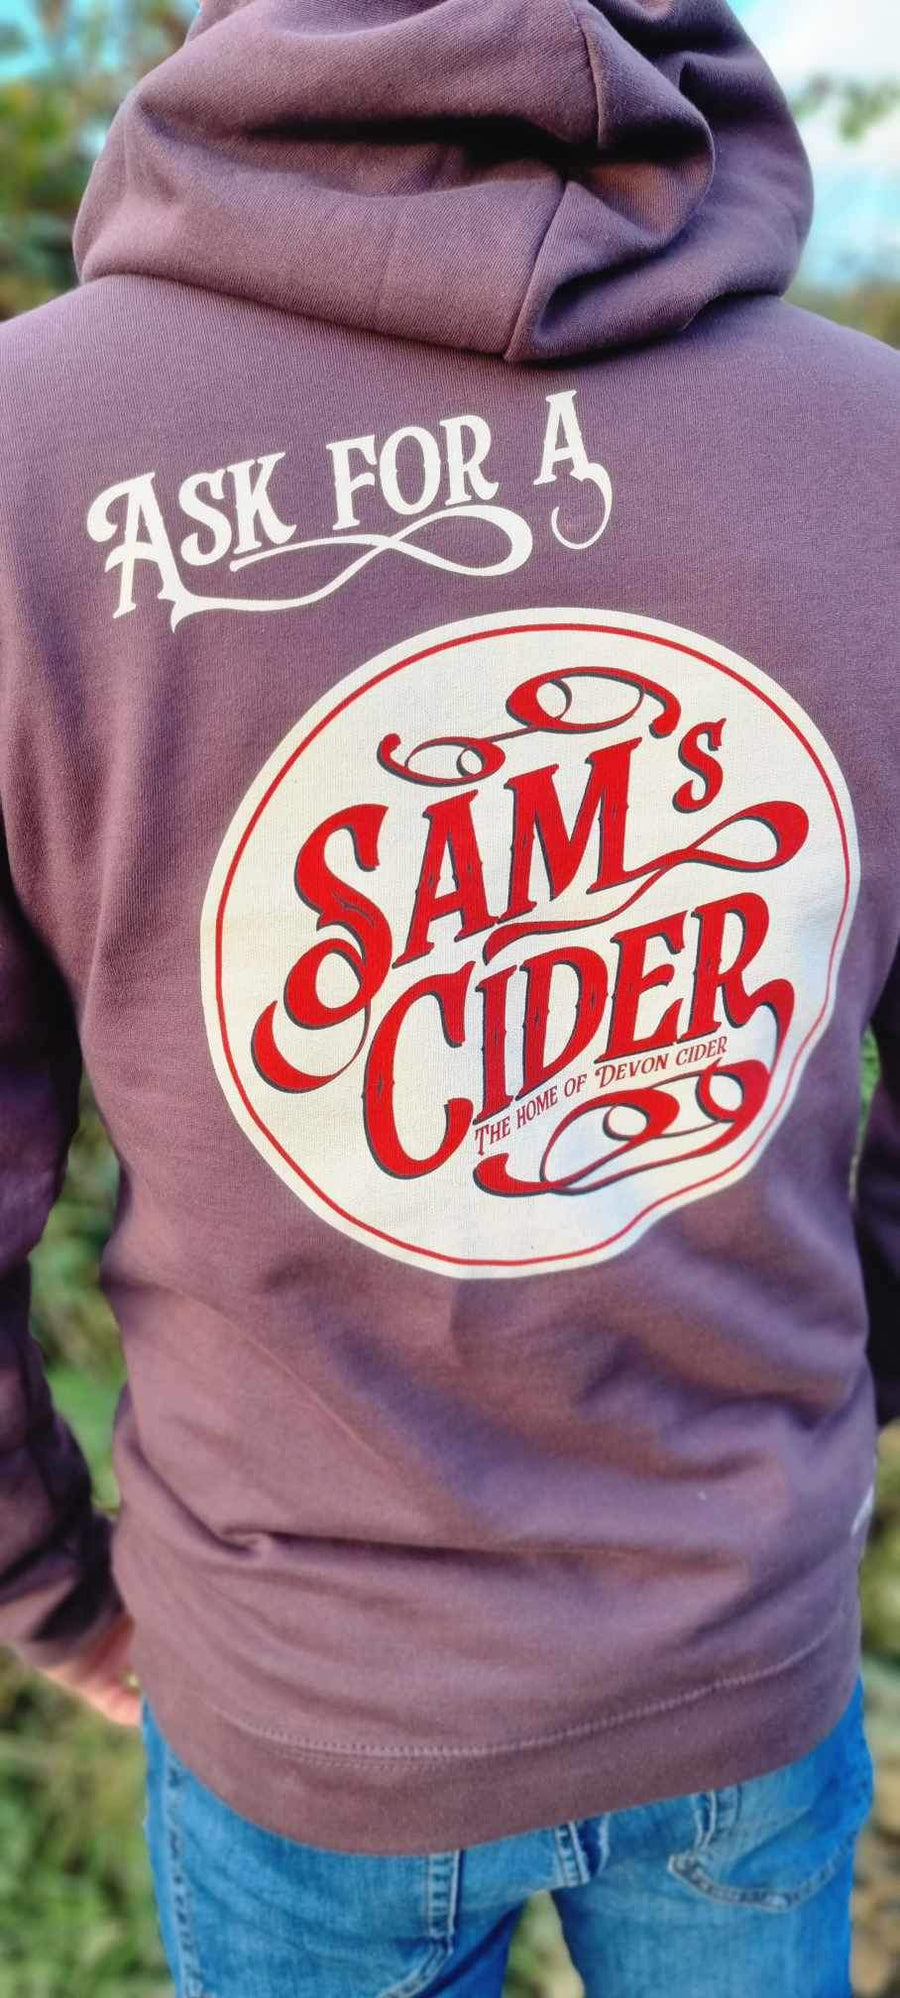 Sam's Cider Hoodies